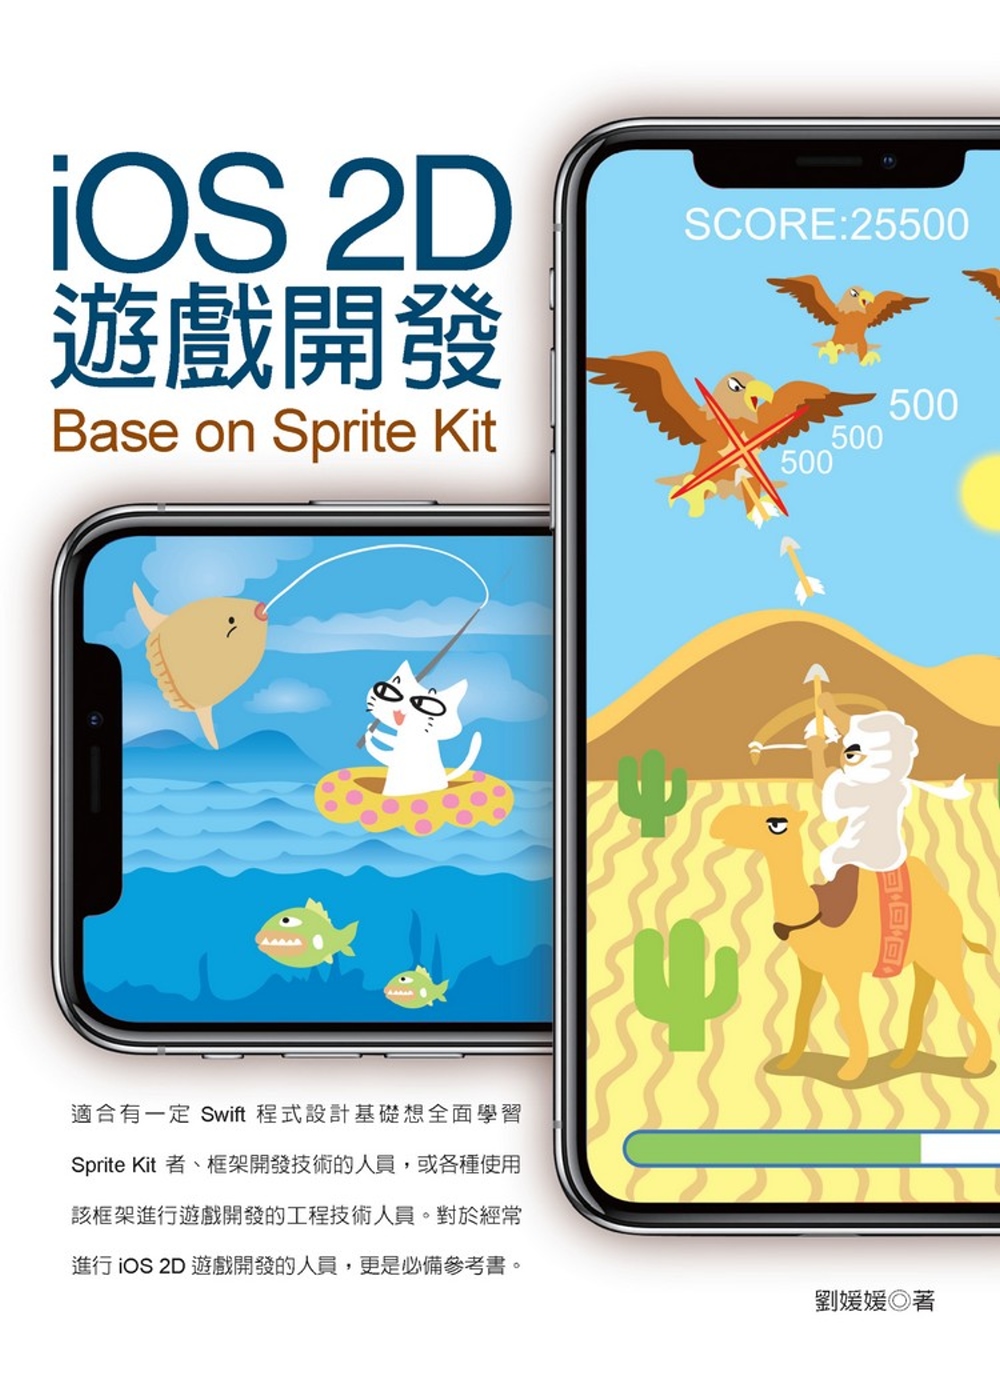 iOS 2D遊戲開發 - Base on Sprite Kit